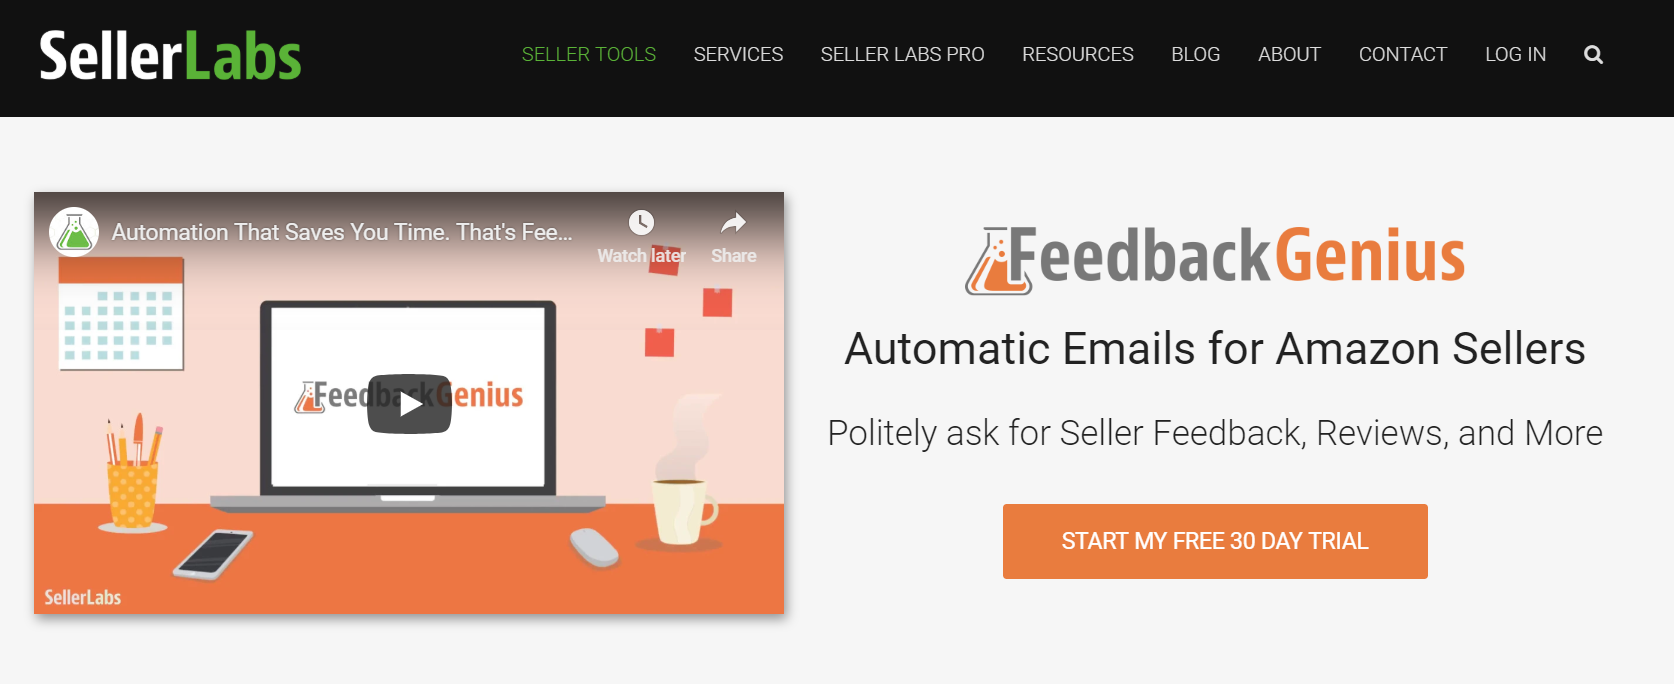 FeedBack Genius- Amazon Seller Tools